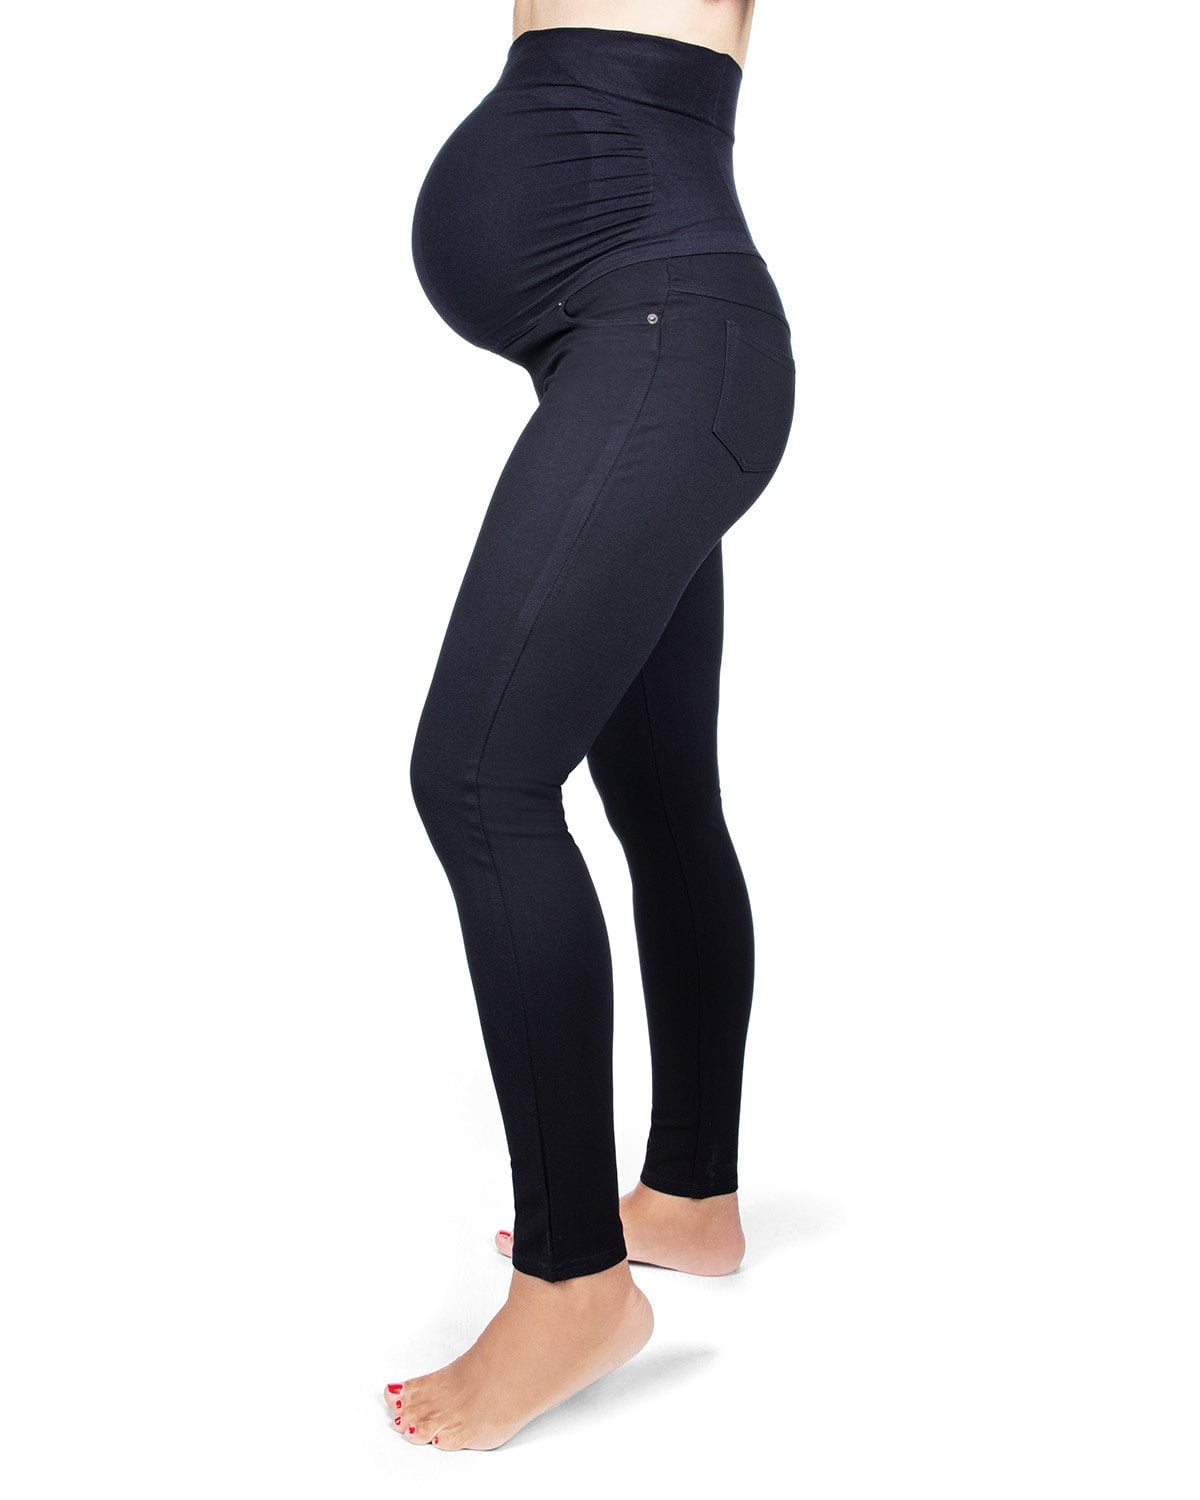 MeMoi Ponte Maternity Leggings | MeMoi Pregnancy Support Leggings ...